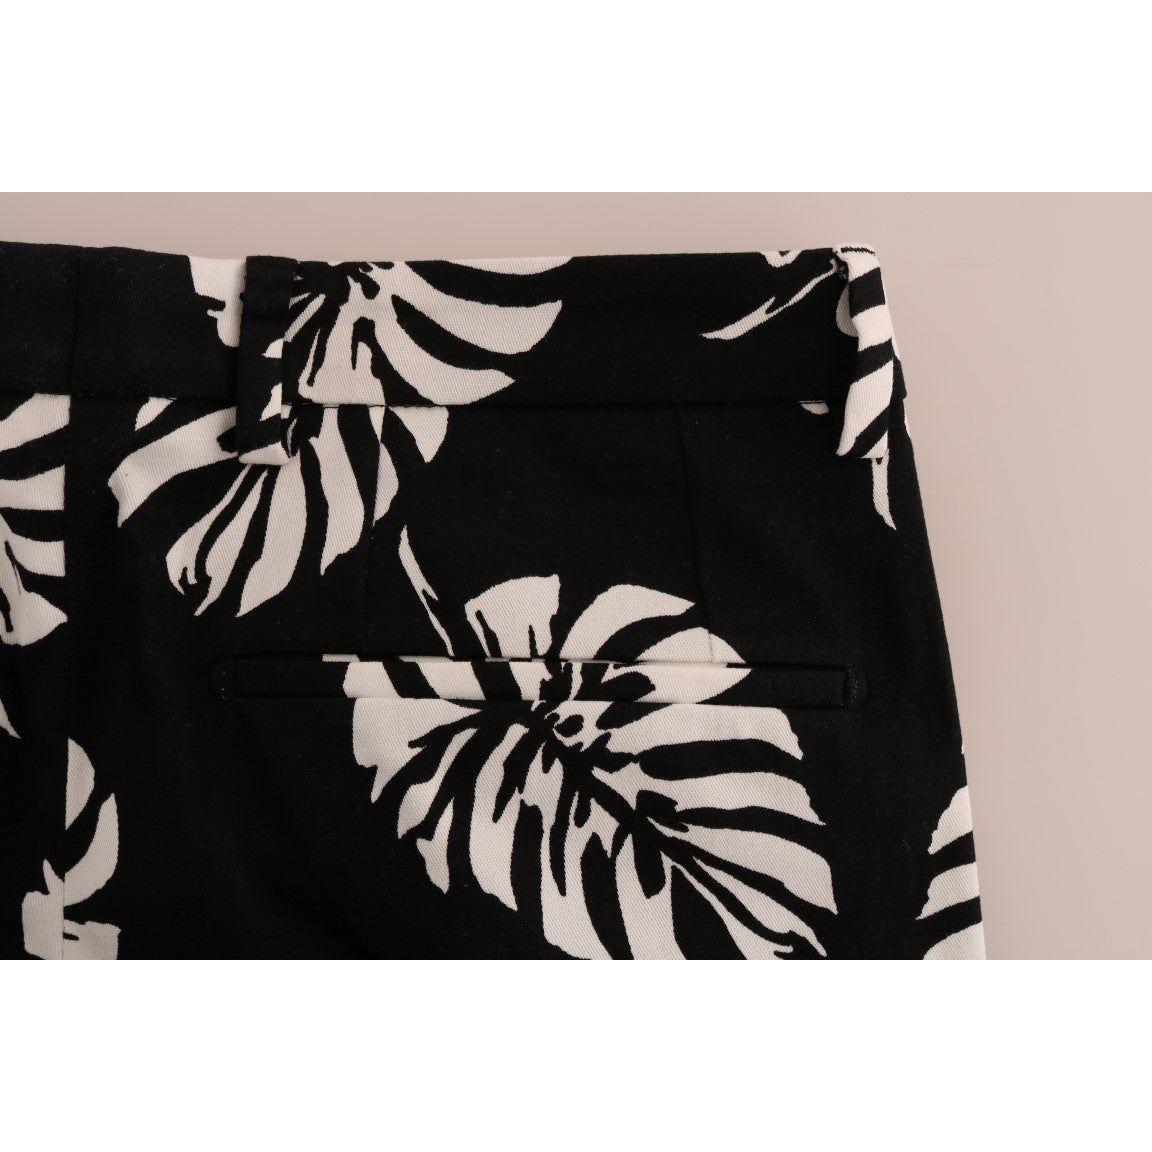 Dolce & Gabbana Slim Fit Leaf Print Ankle Pants white-black-leaf-cotton-stretch-slim-pants